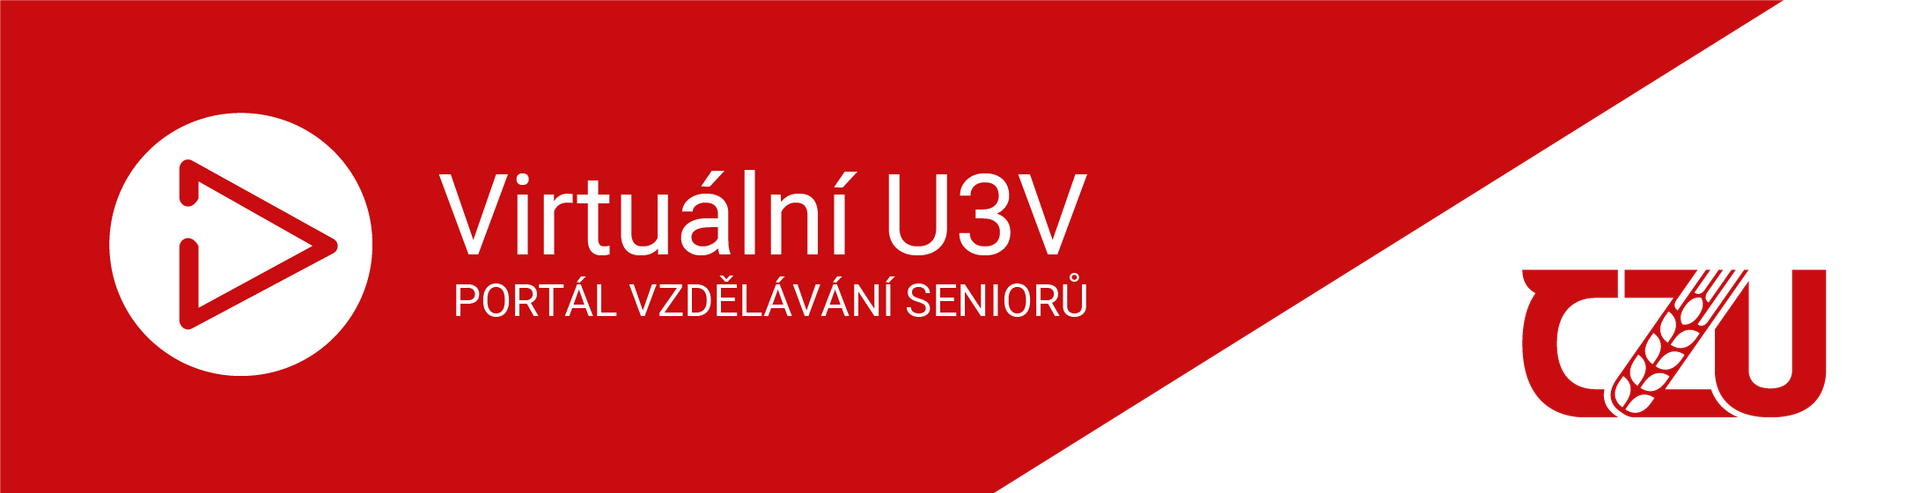 Logo VU3V 08